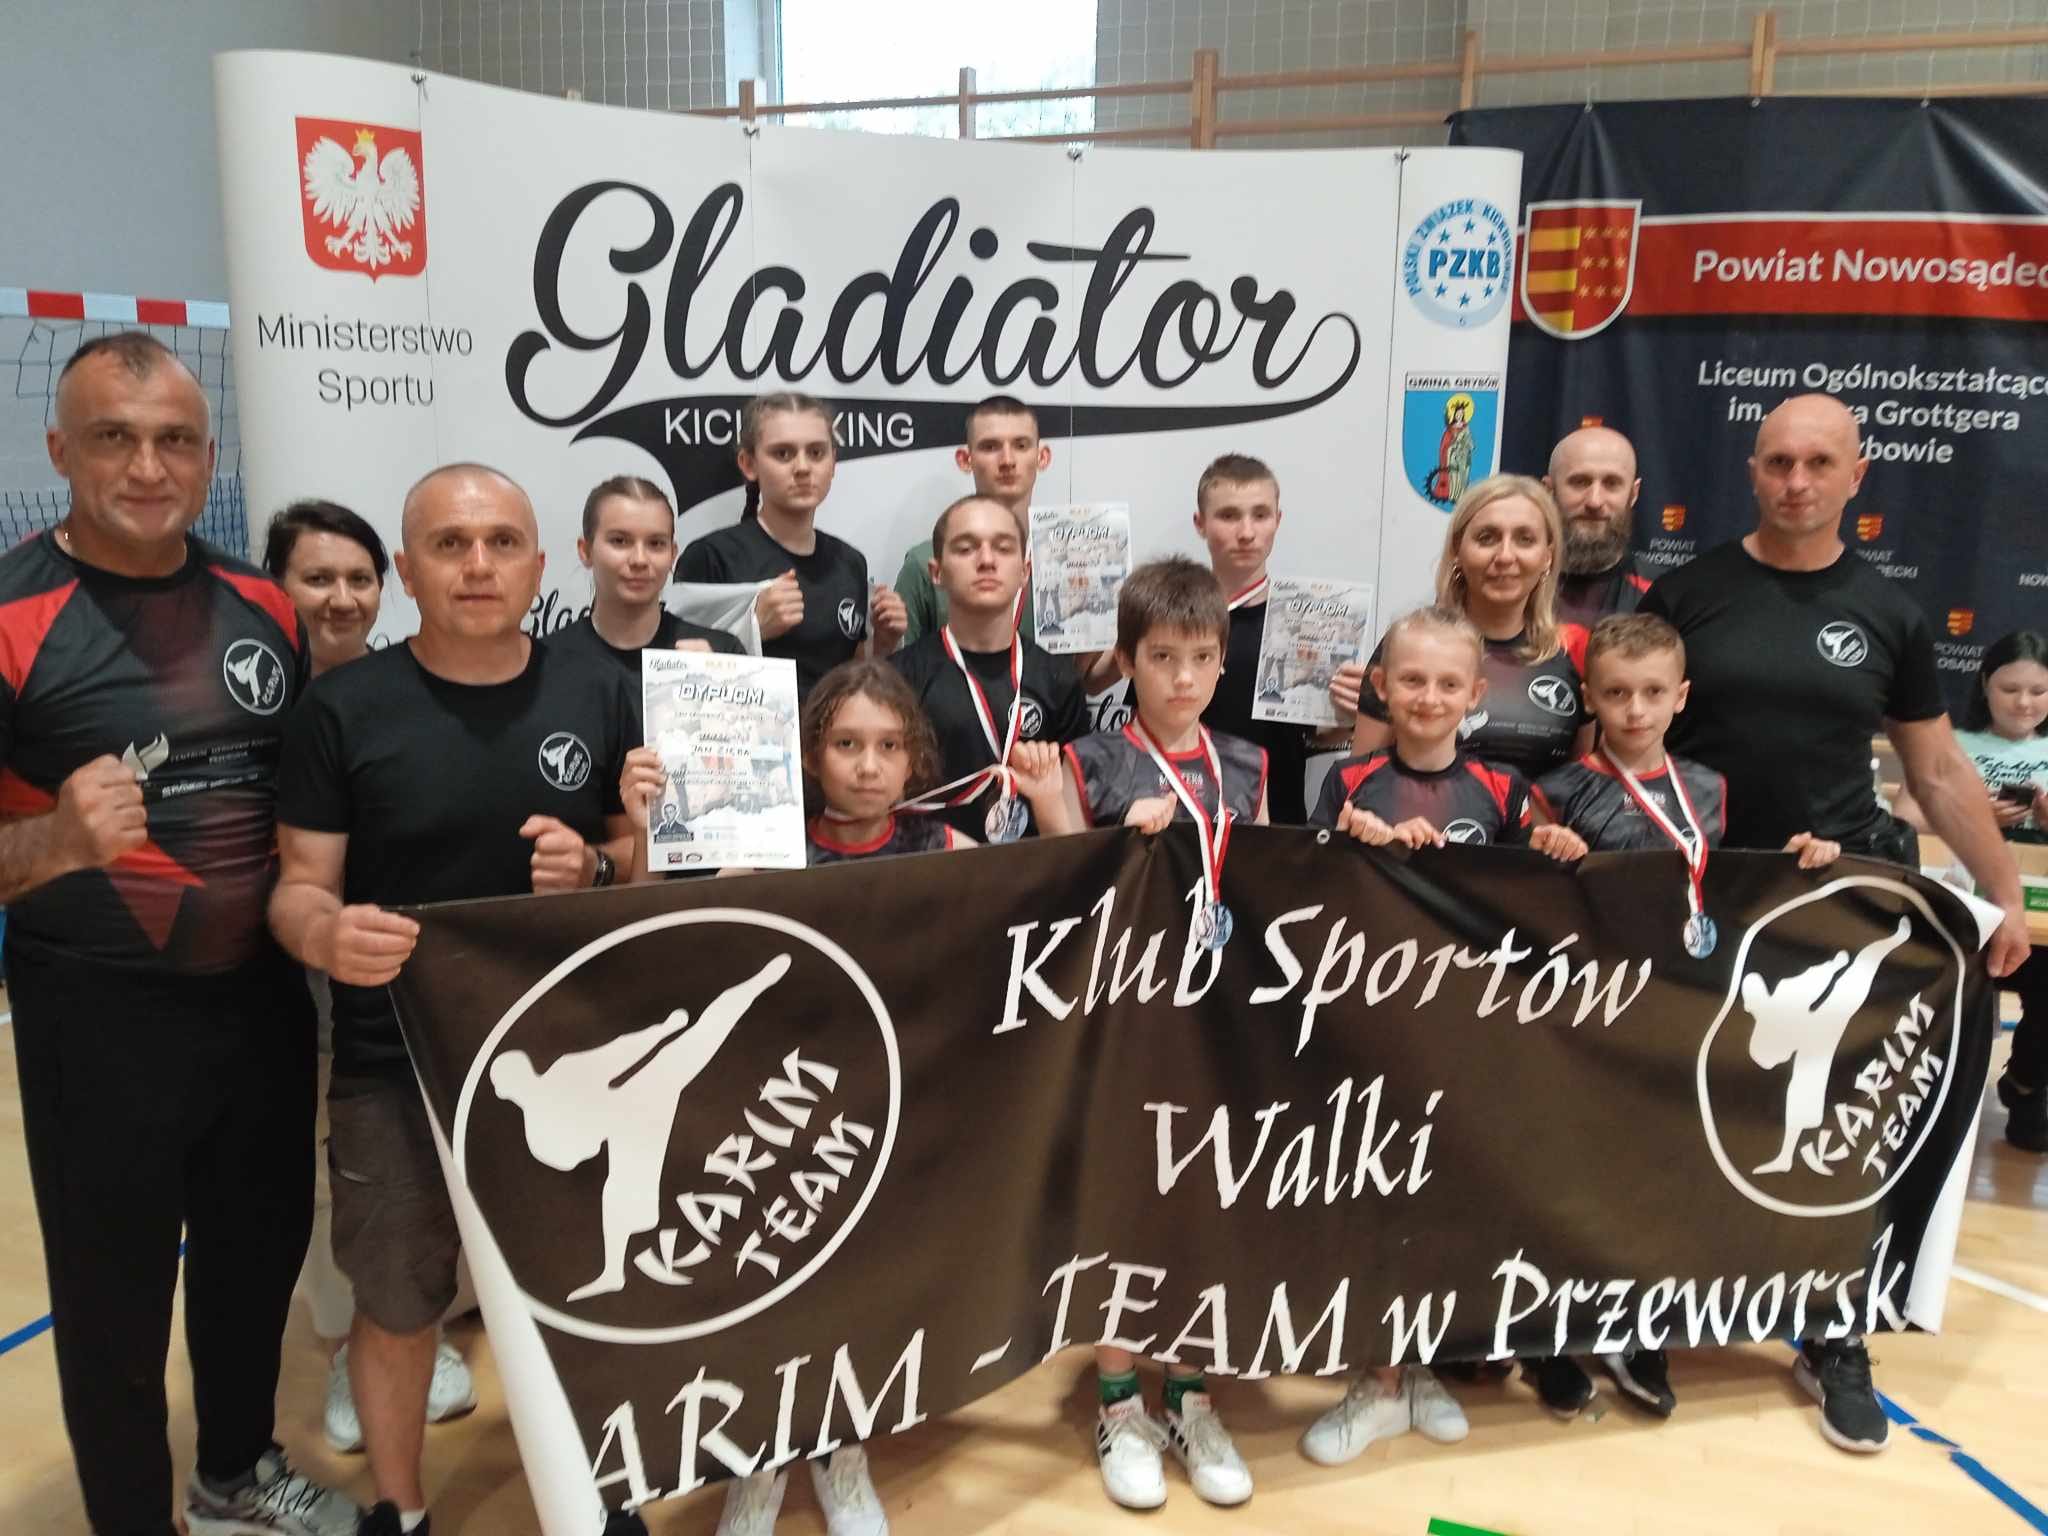 KSW Karim Team – Grybowska Liga Kickboxingu